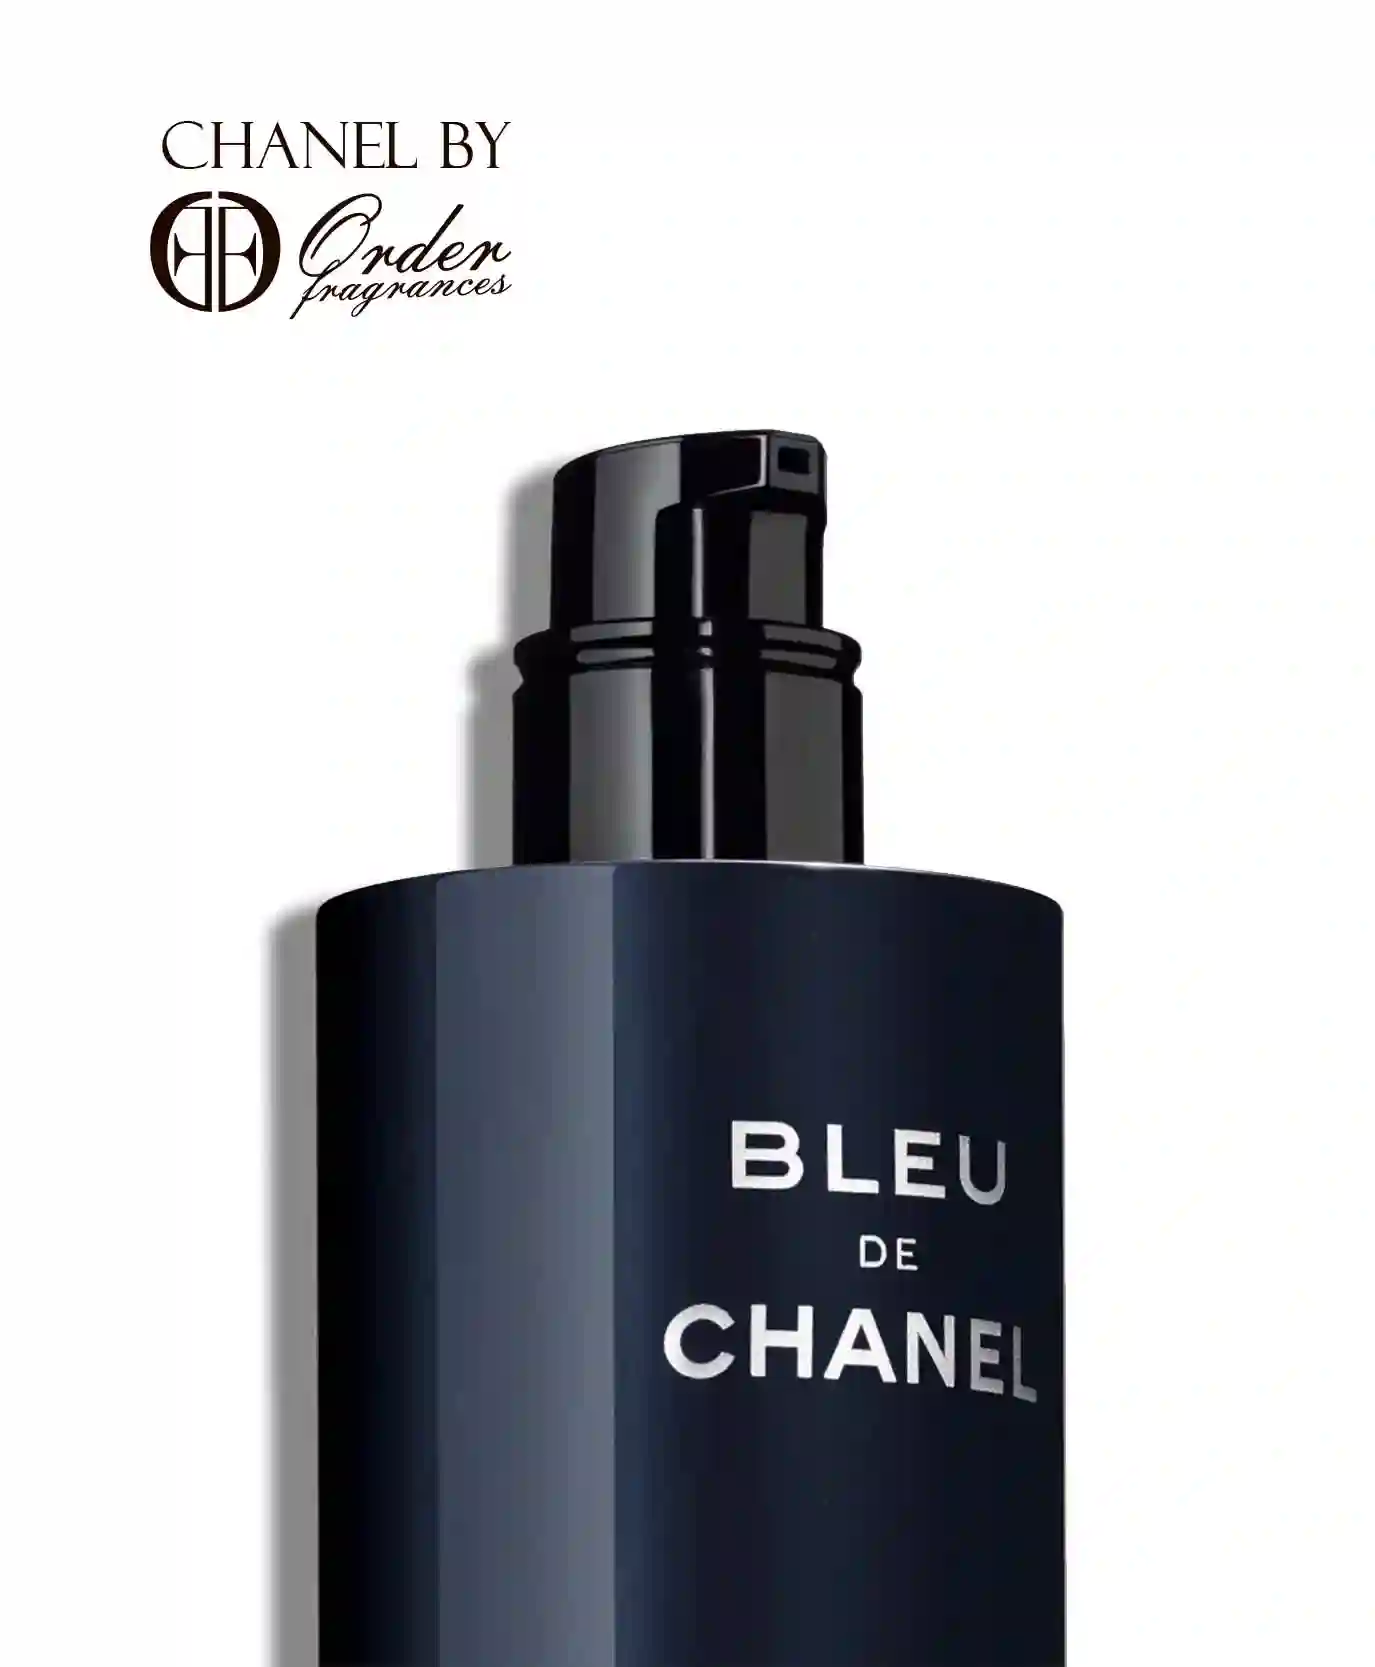 Bleu de chanel 2-in-1 Moisturizer for Face and Beard